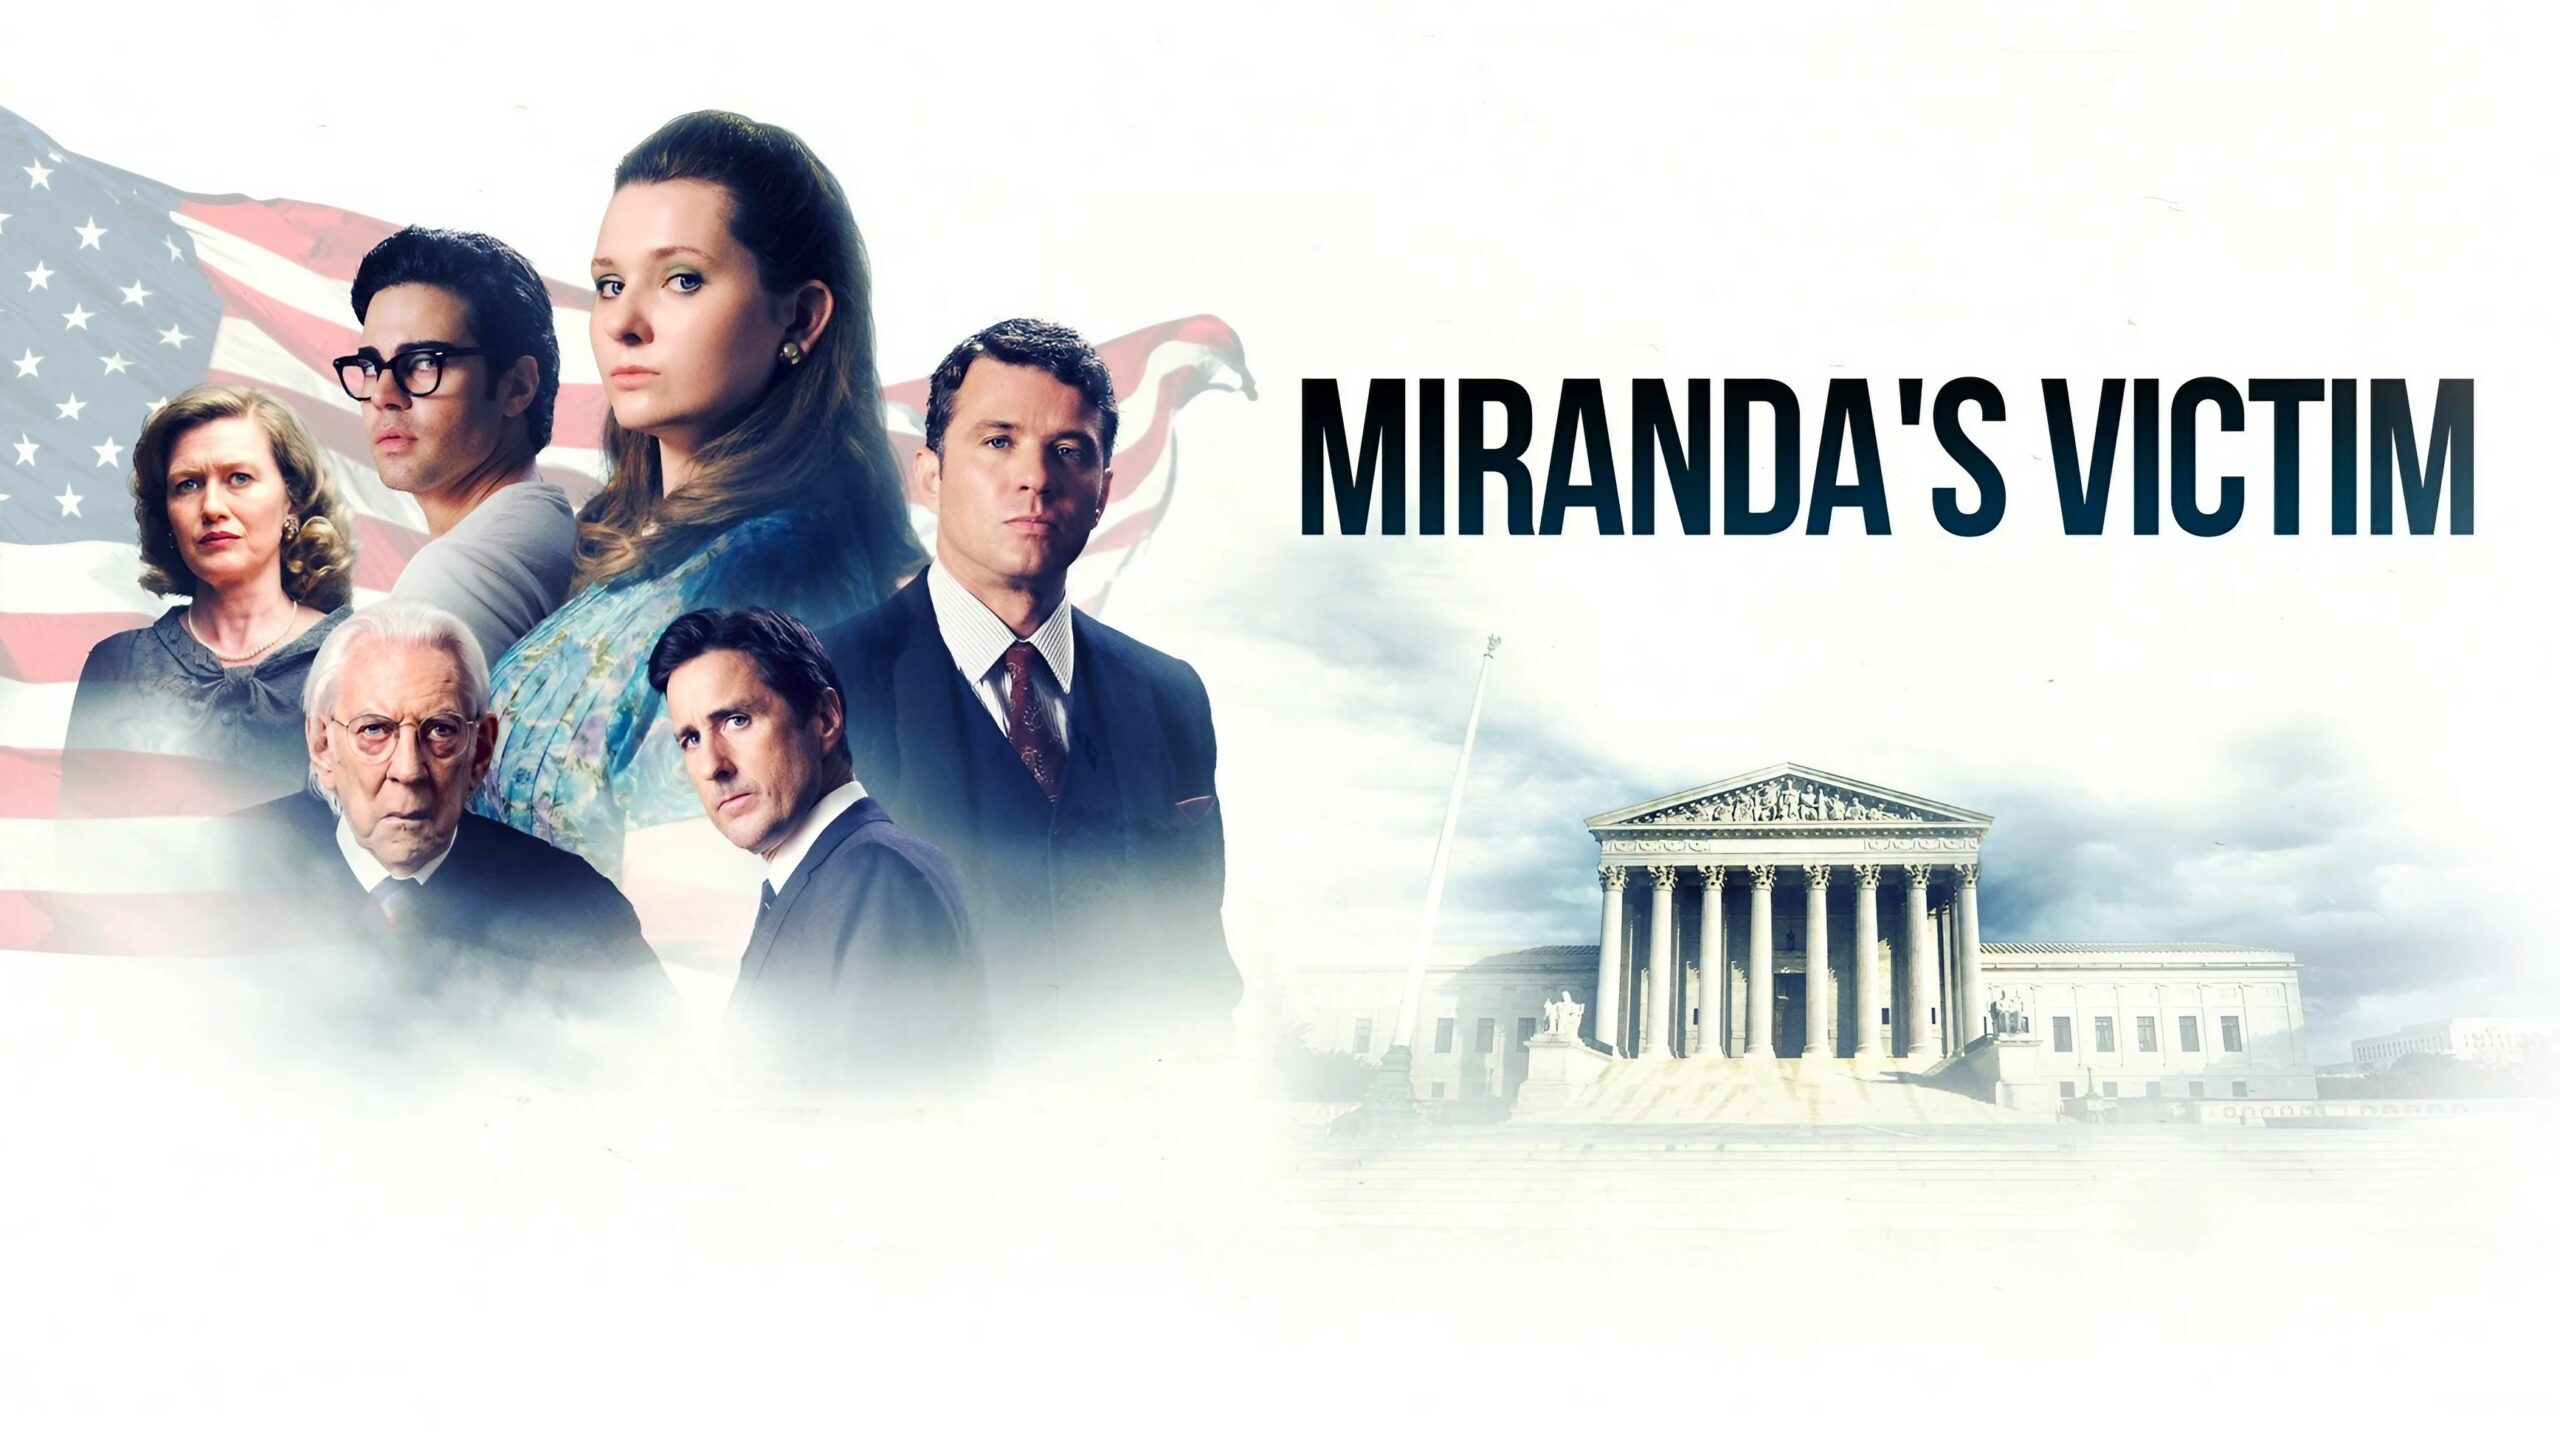 Is Miranda’s Victim Based On A True Story?